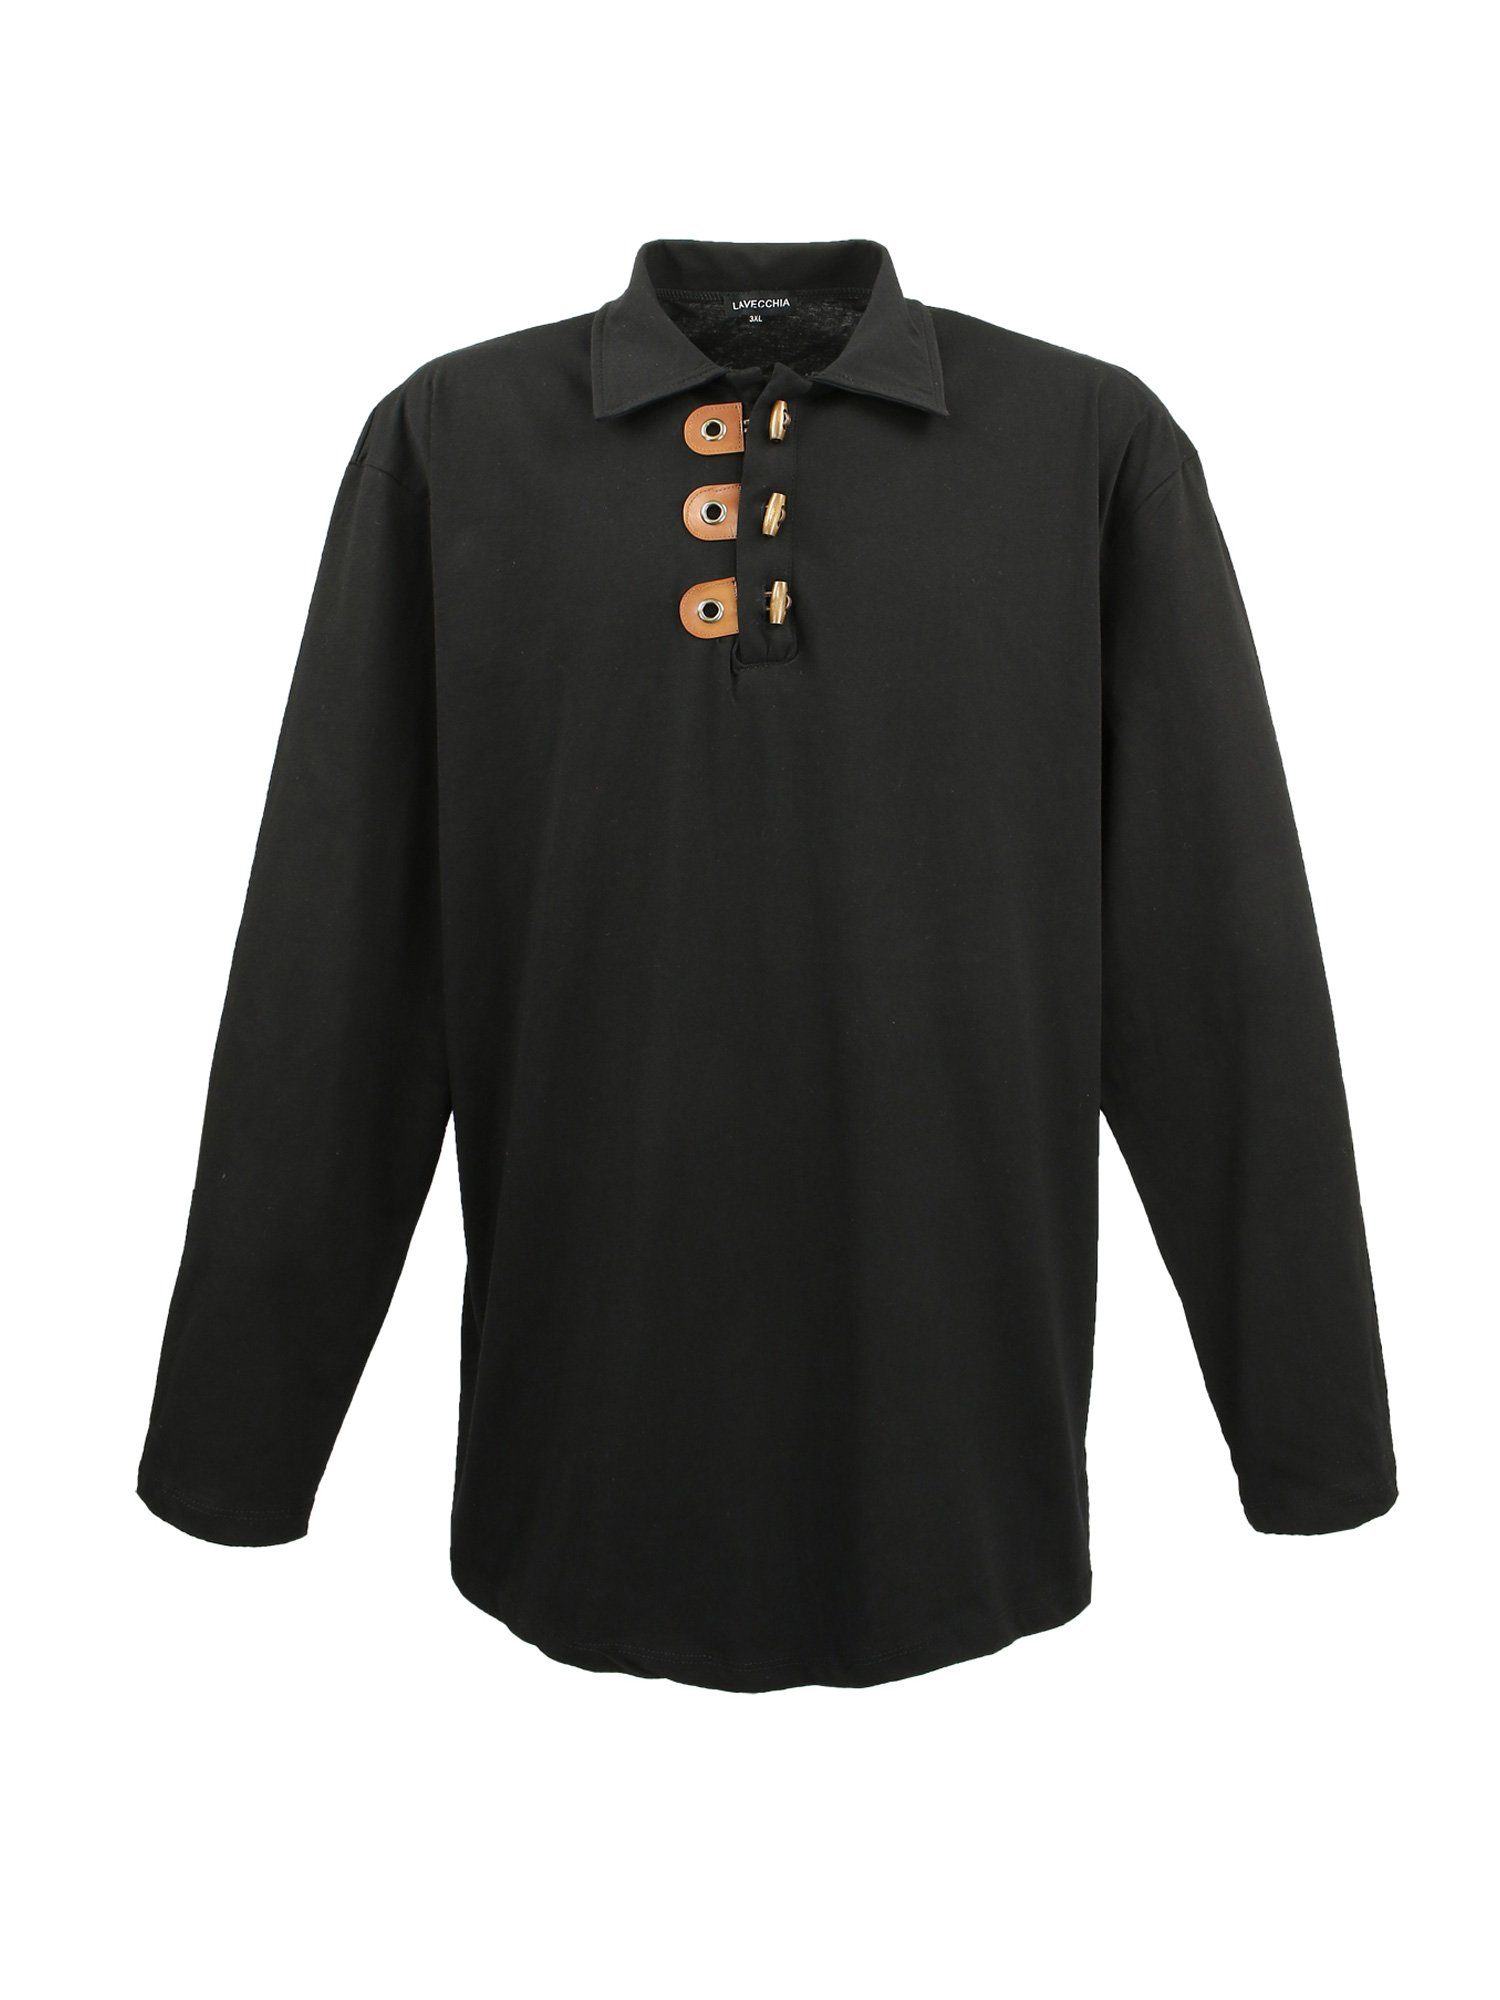 LV-604 Langarm-Poloshirt Übergrößen Lavecchia Langarmshirt Shirt Herren